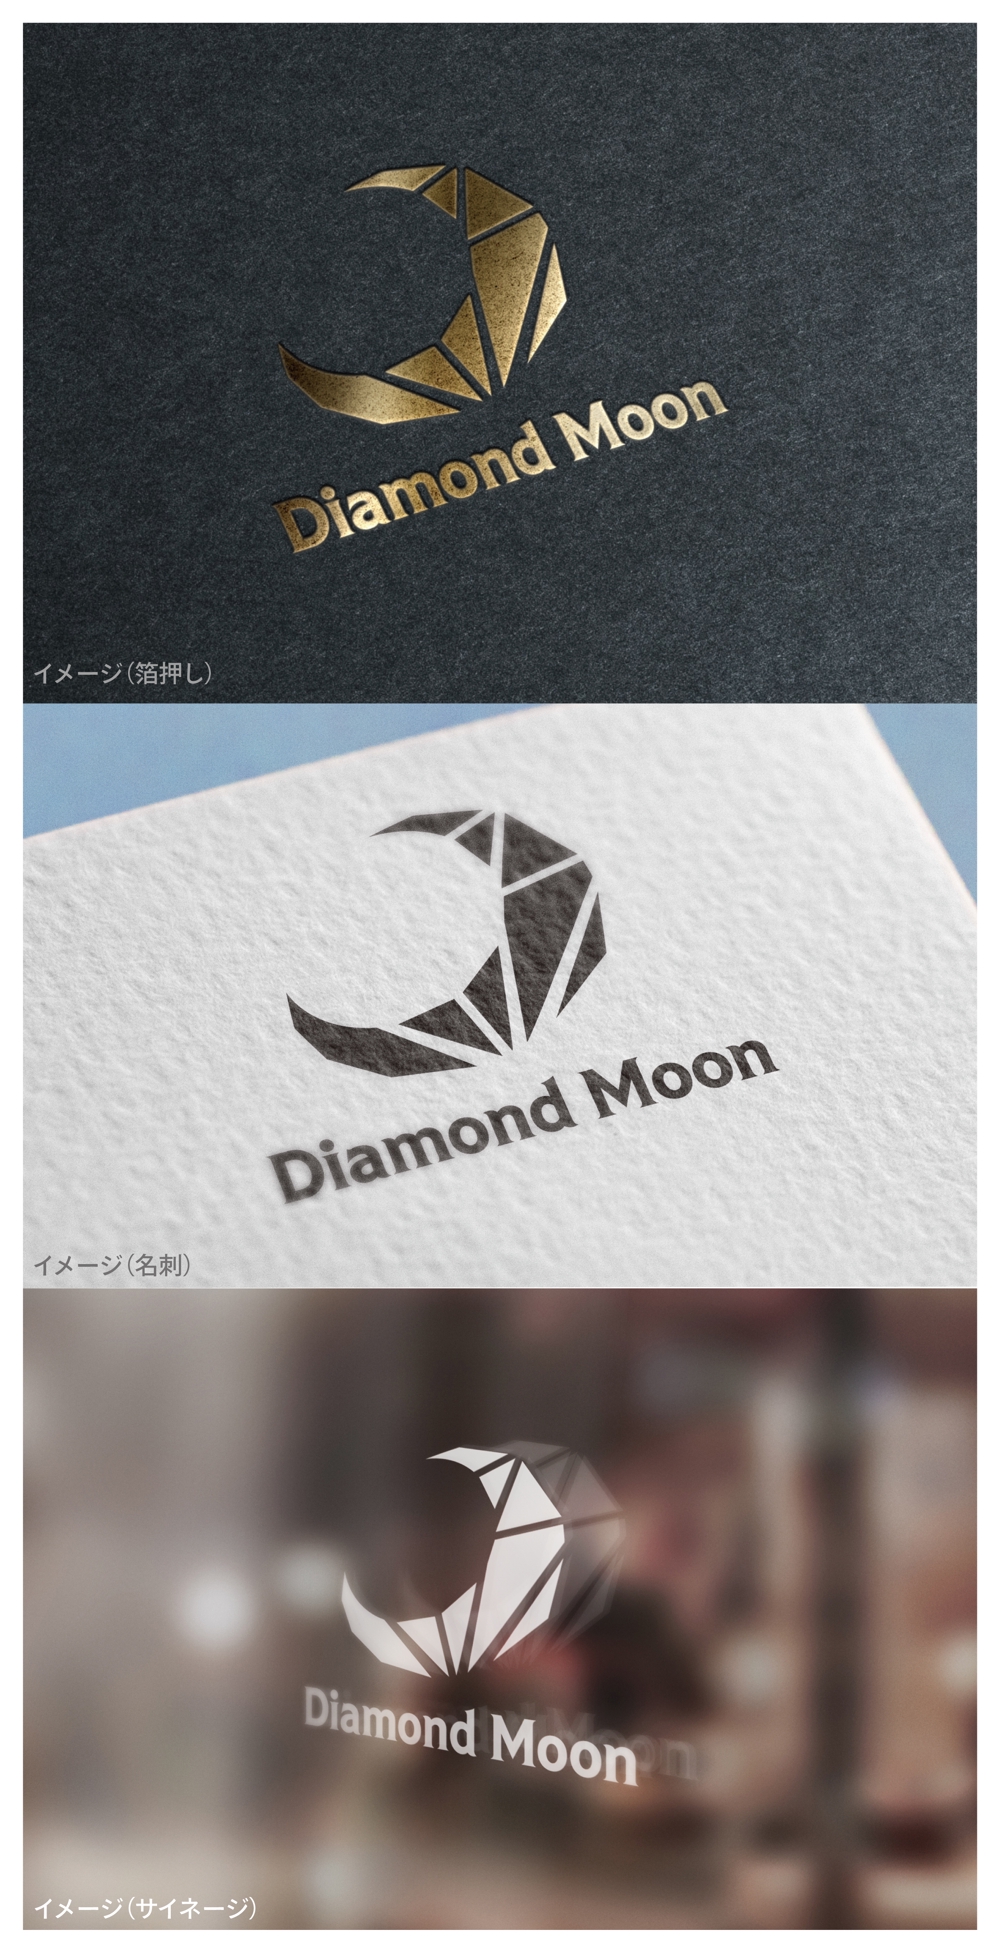 Diamond Moon_logo01_01.jpg